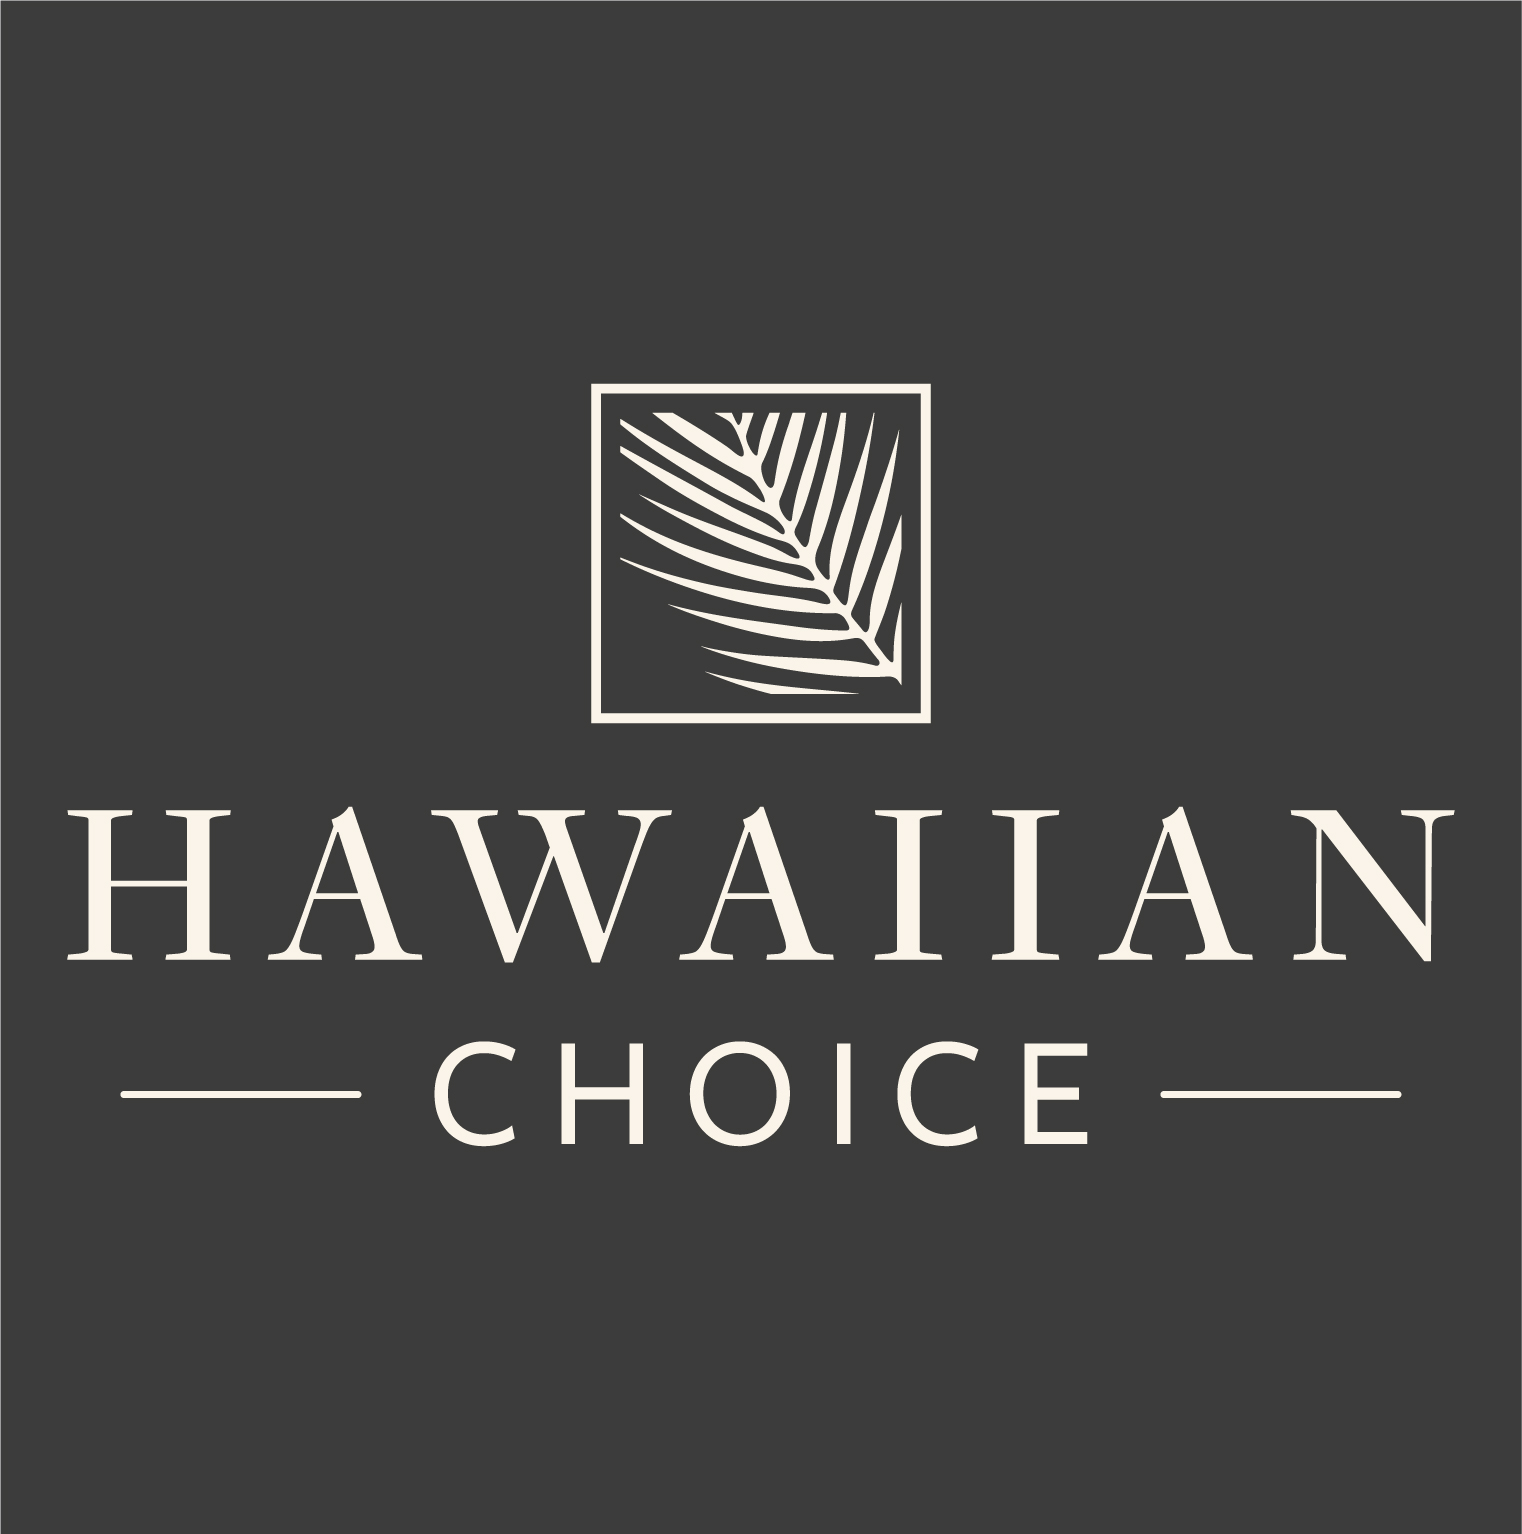 Hawaiian Choice logo